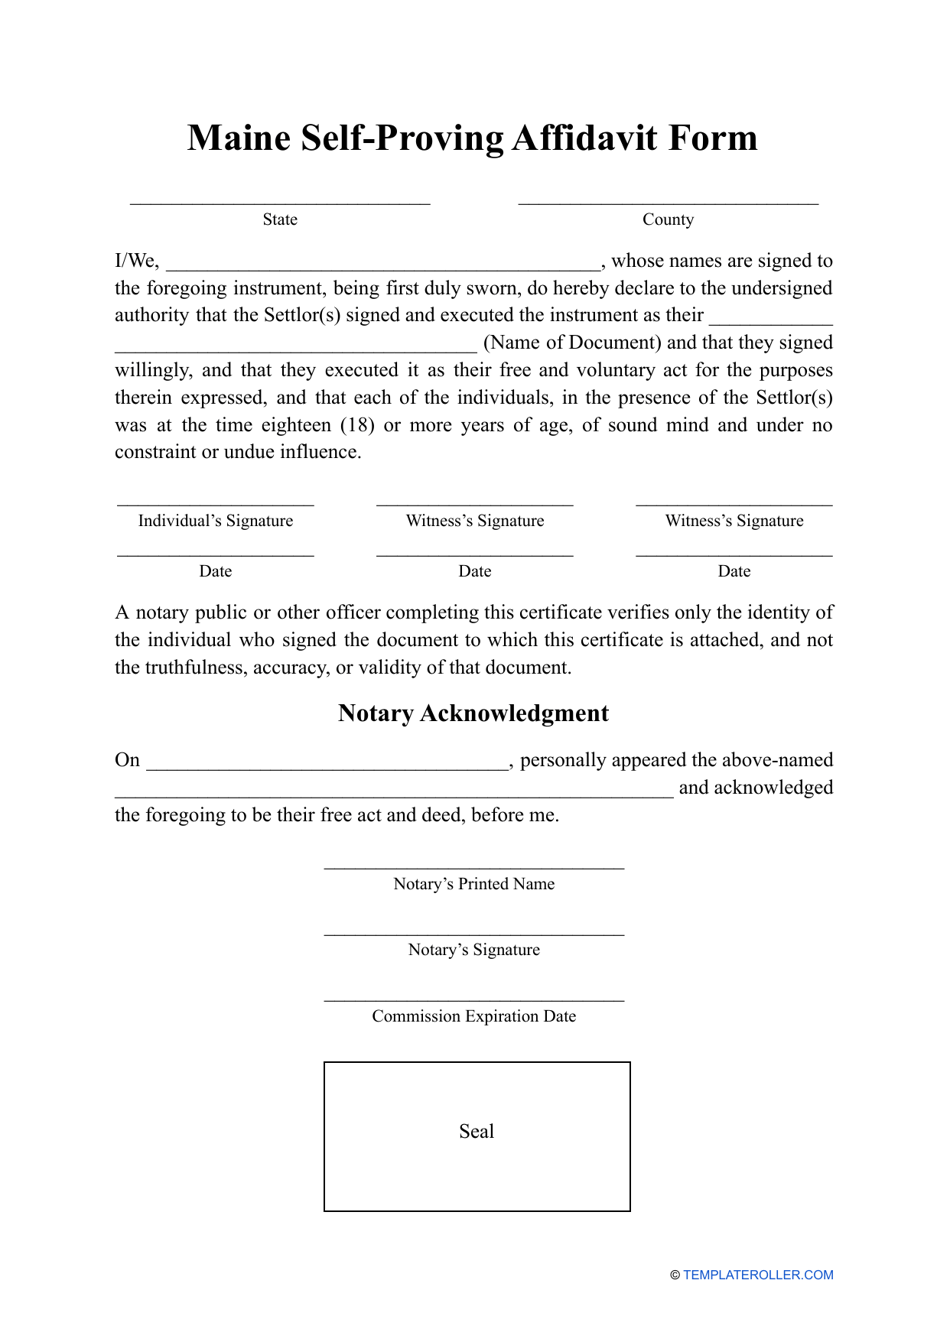 Self-proving Affidavit Form - Maine, Page 1